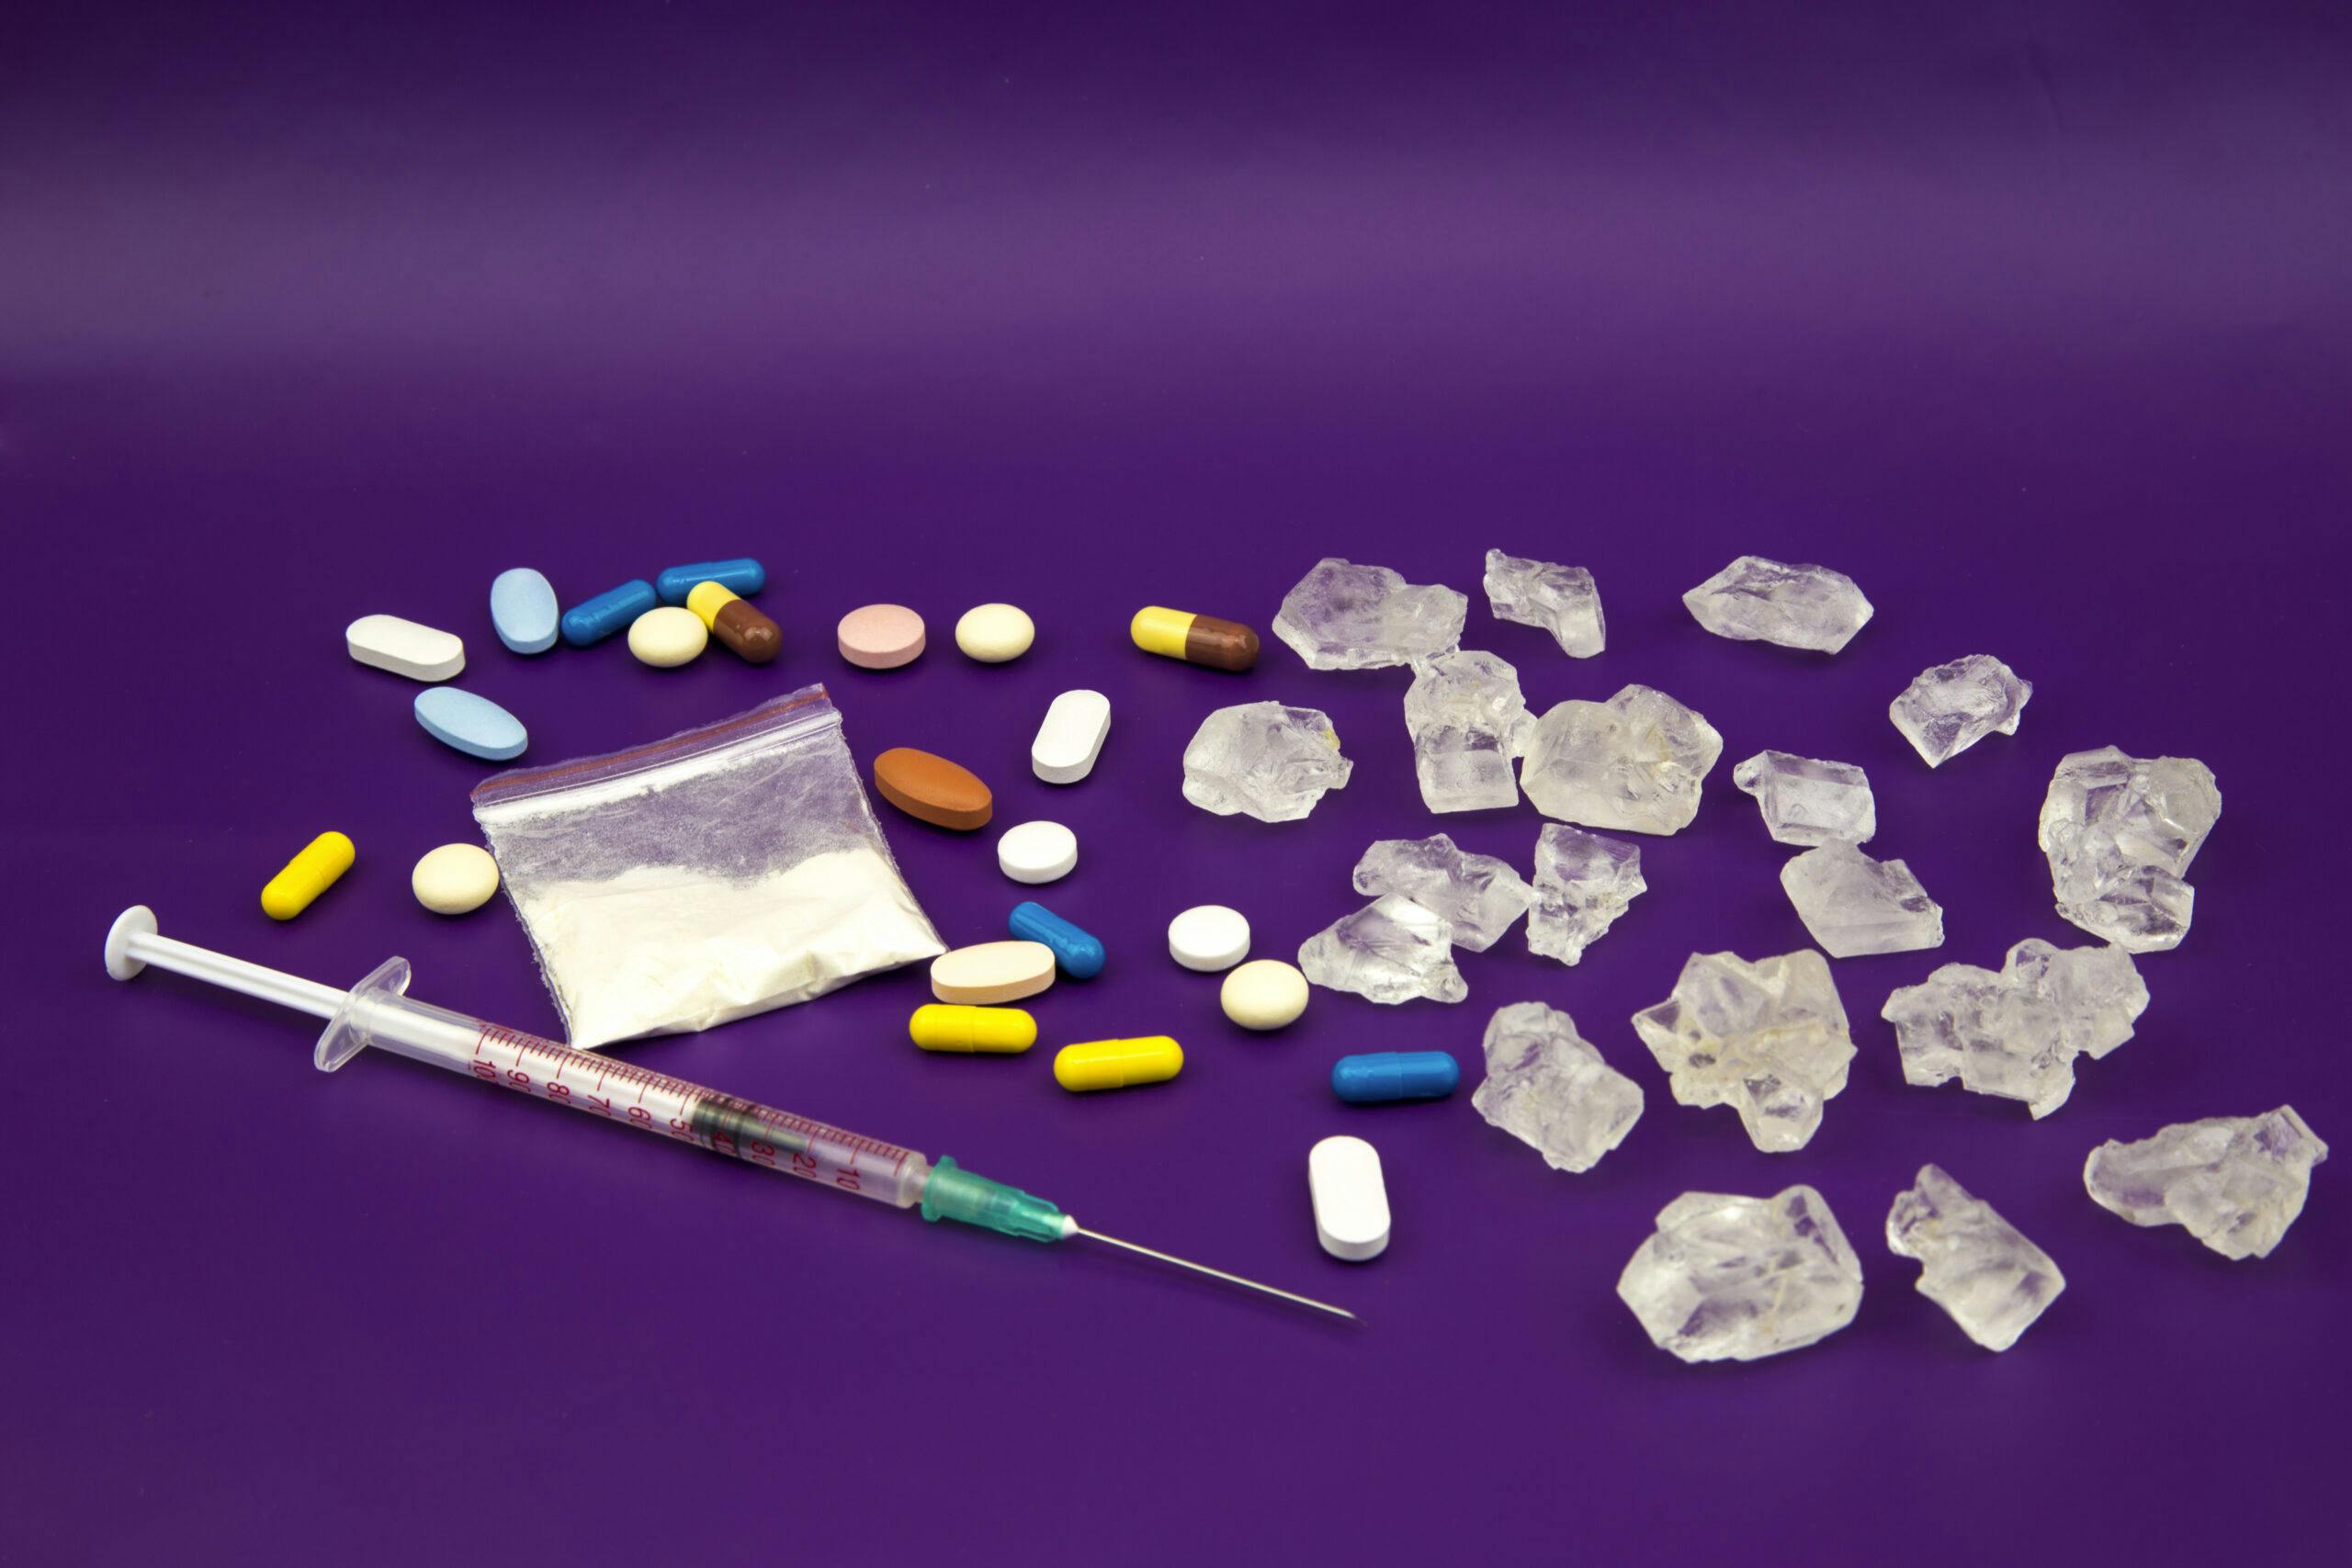 crystal meth pills and needle drugs